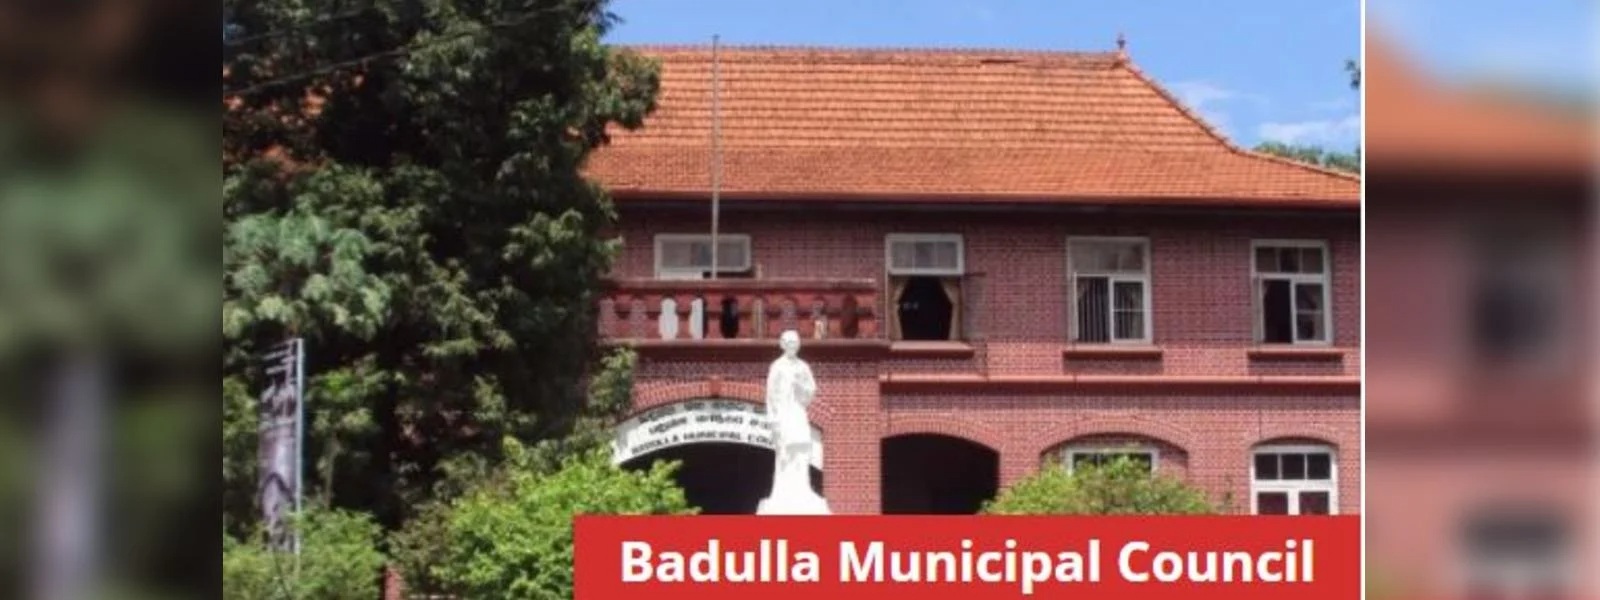 Operations at Badulla MC suspended